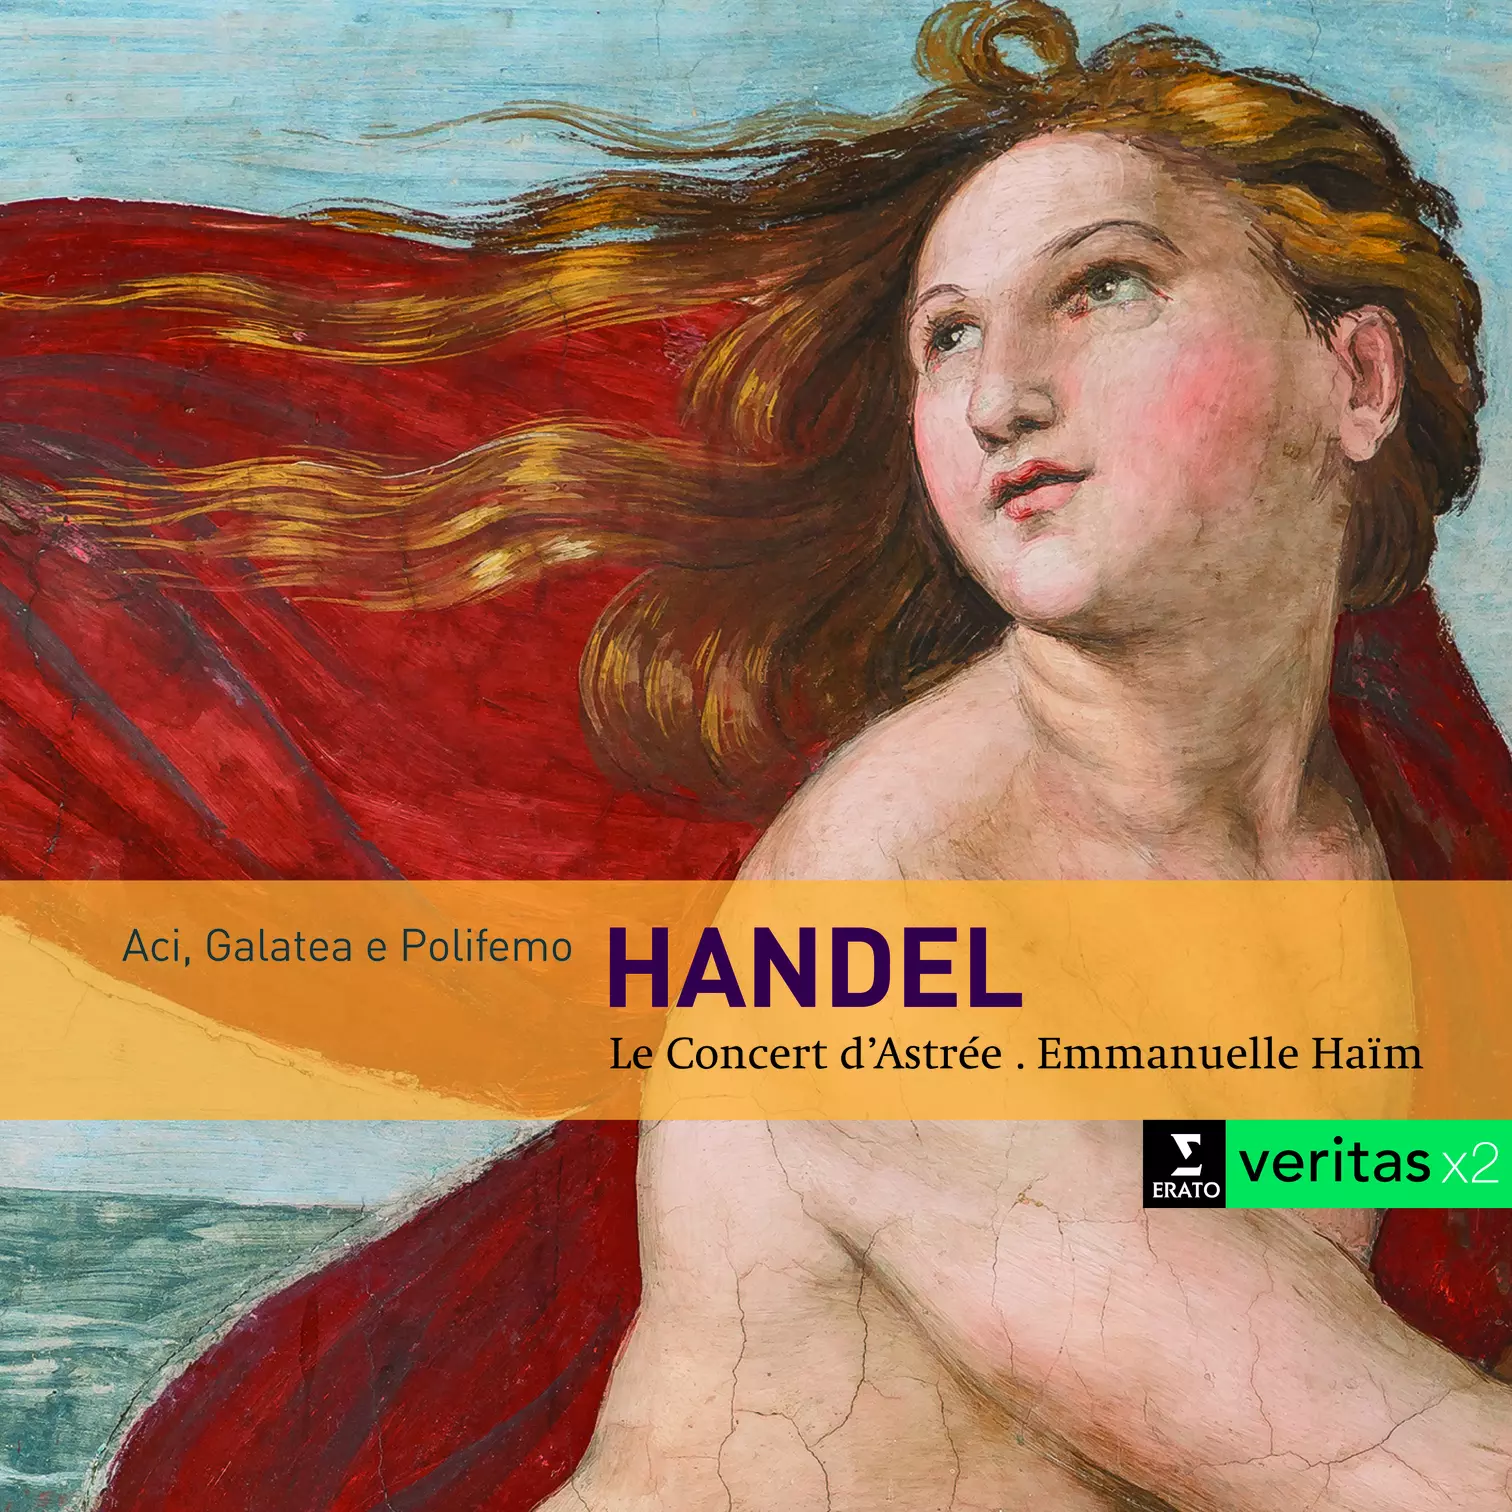 Handel: Aci, Galatea e Polifemo